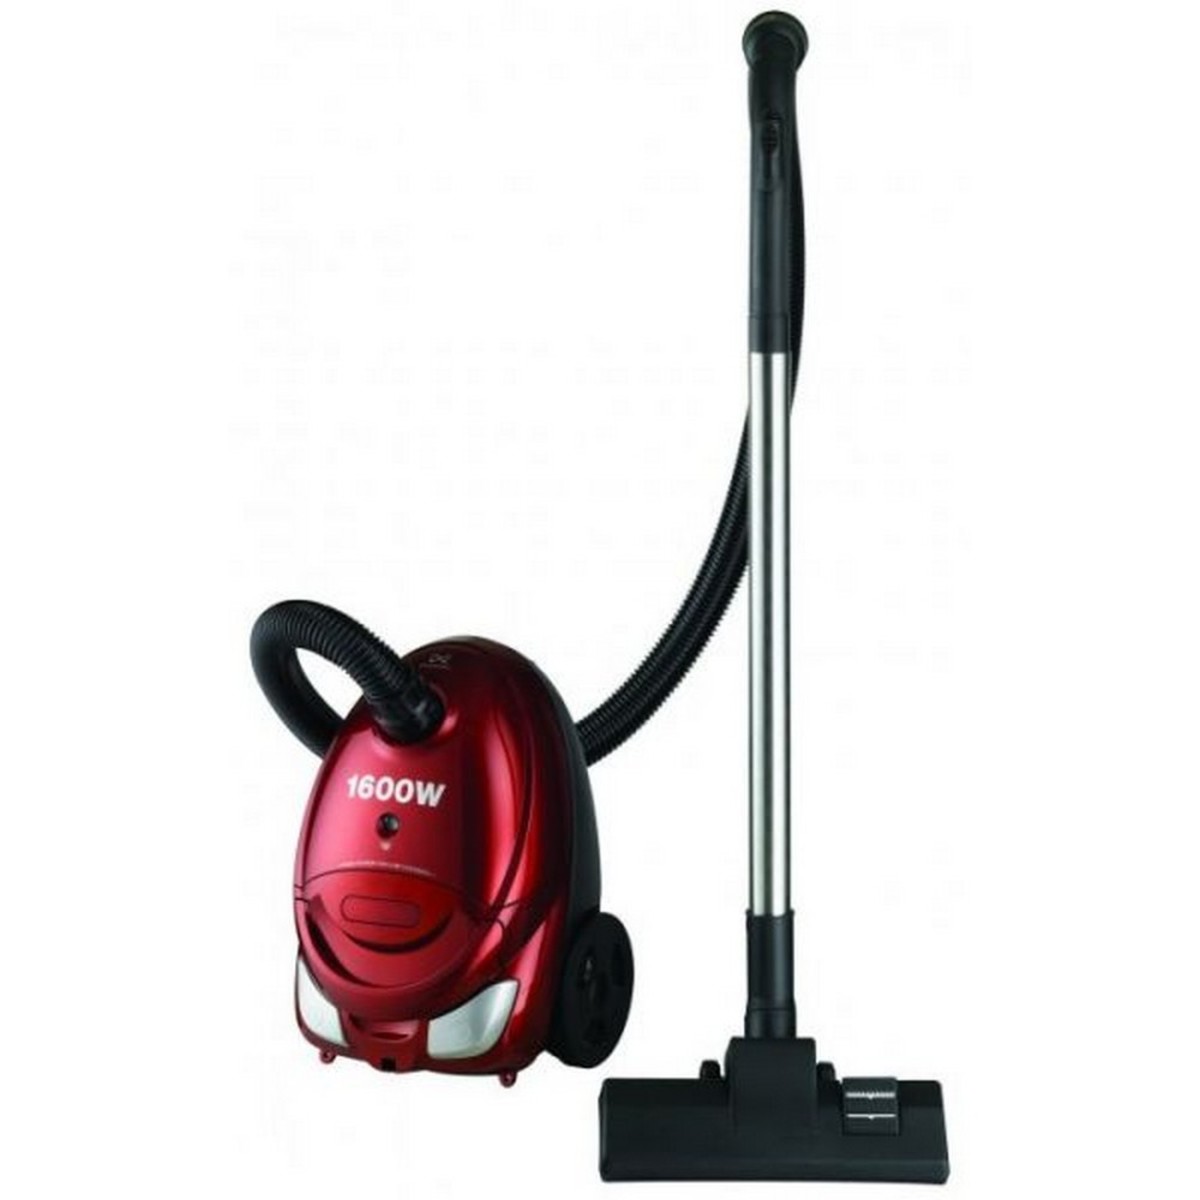 Daewoo Vacuum Cleaner RCG-110 1600W